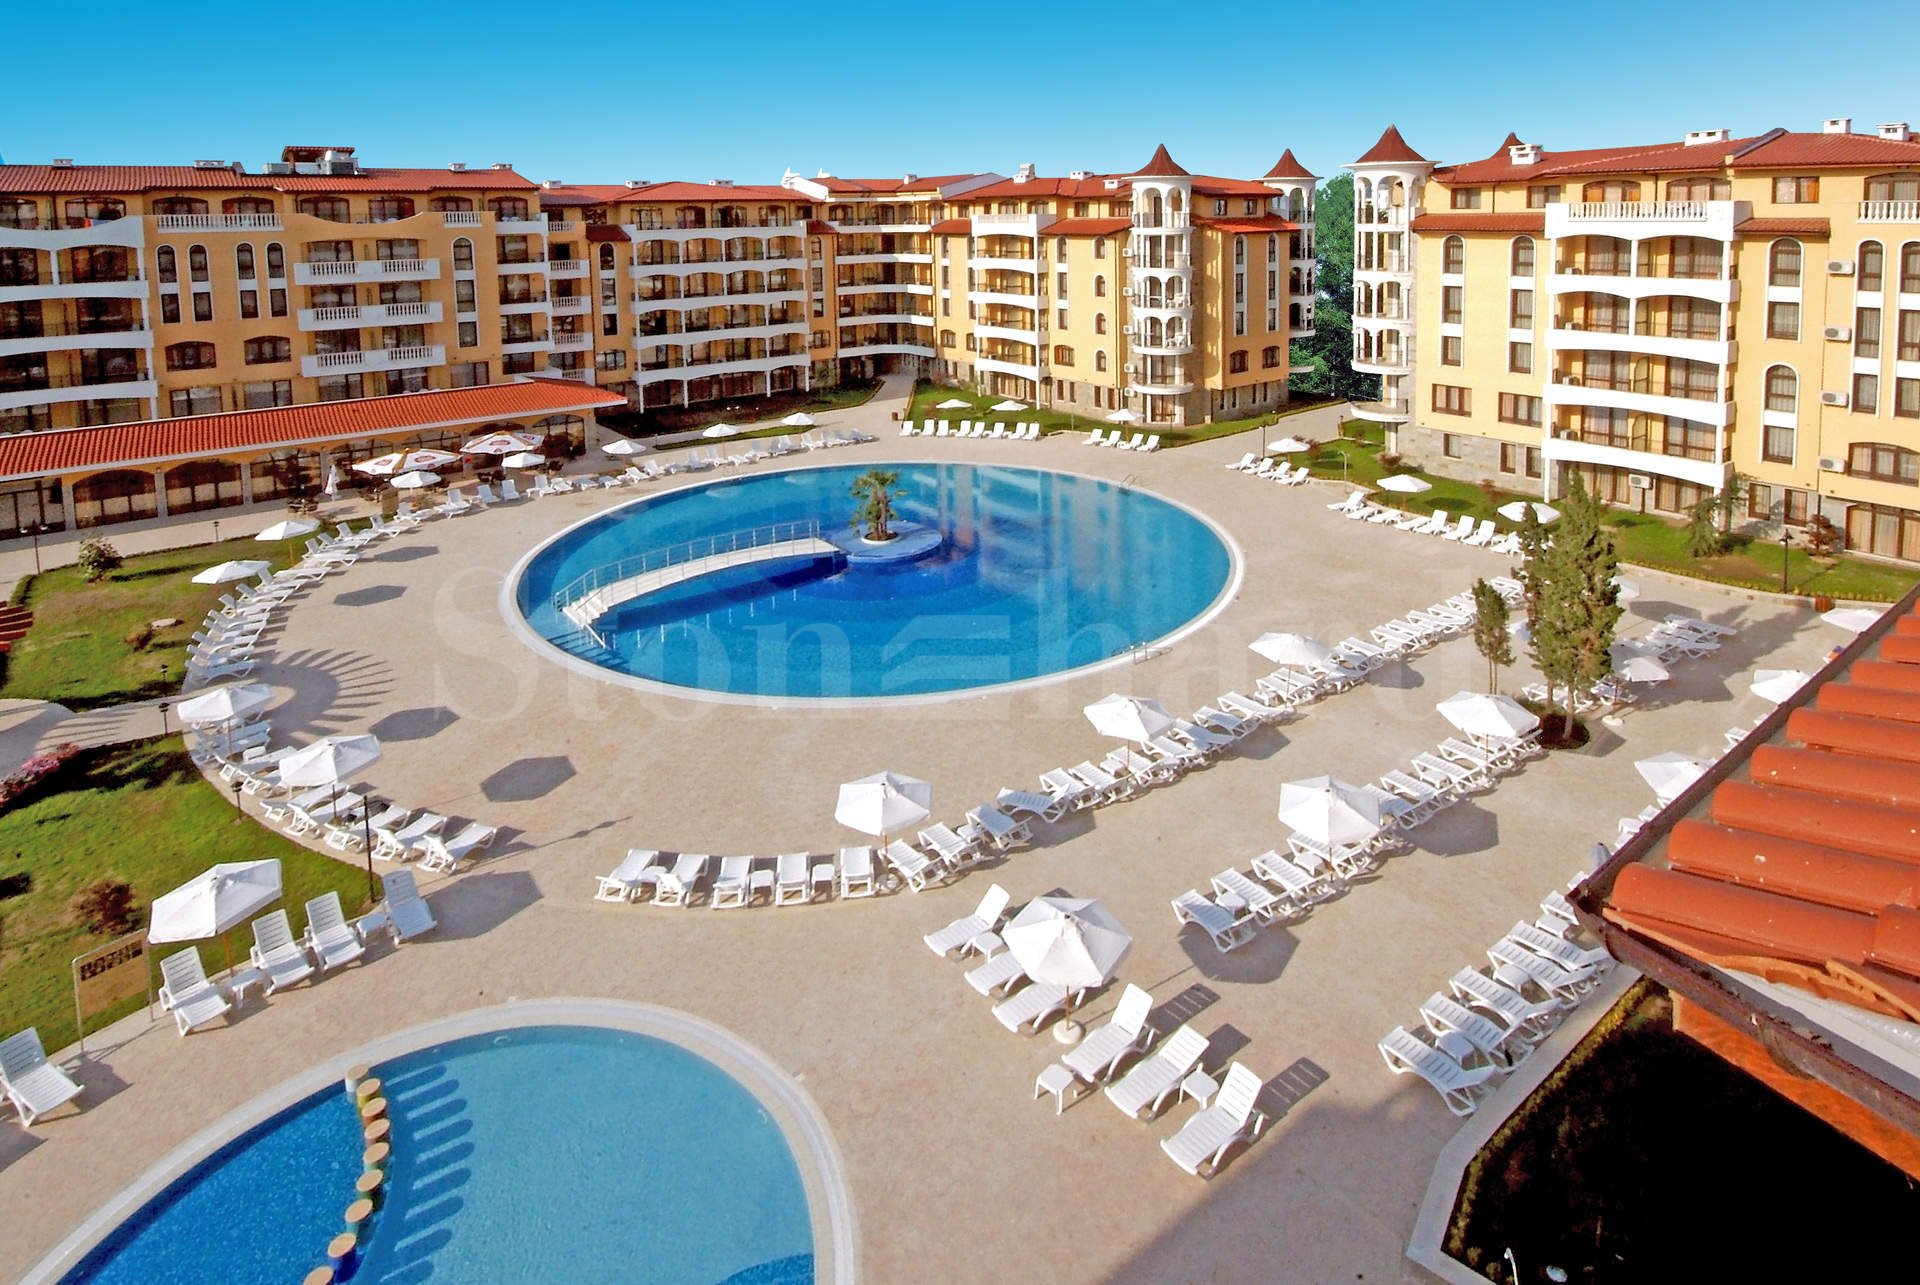 Holiday apartments in the most vibrant Bulgarian Black sea resort1 - Stonehard